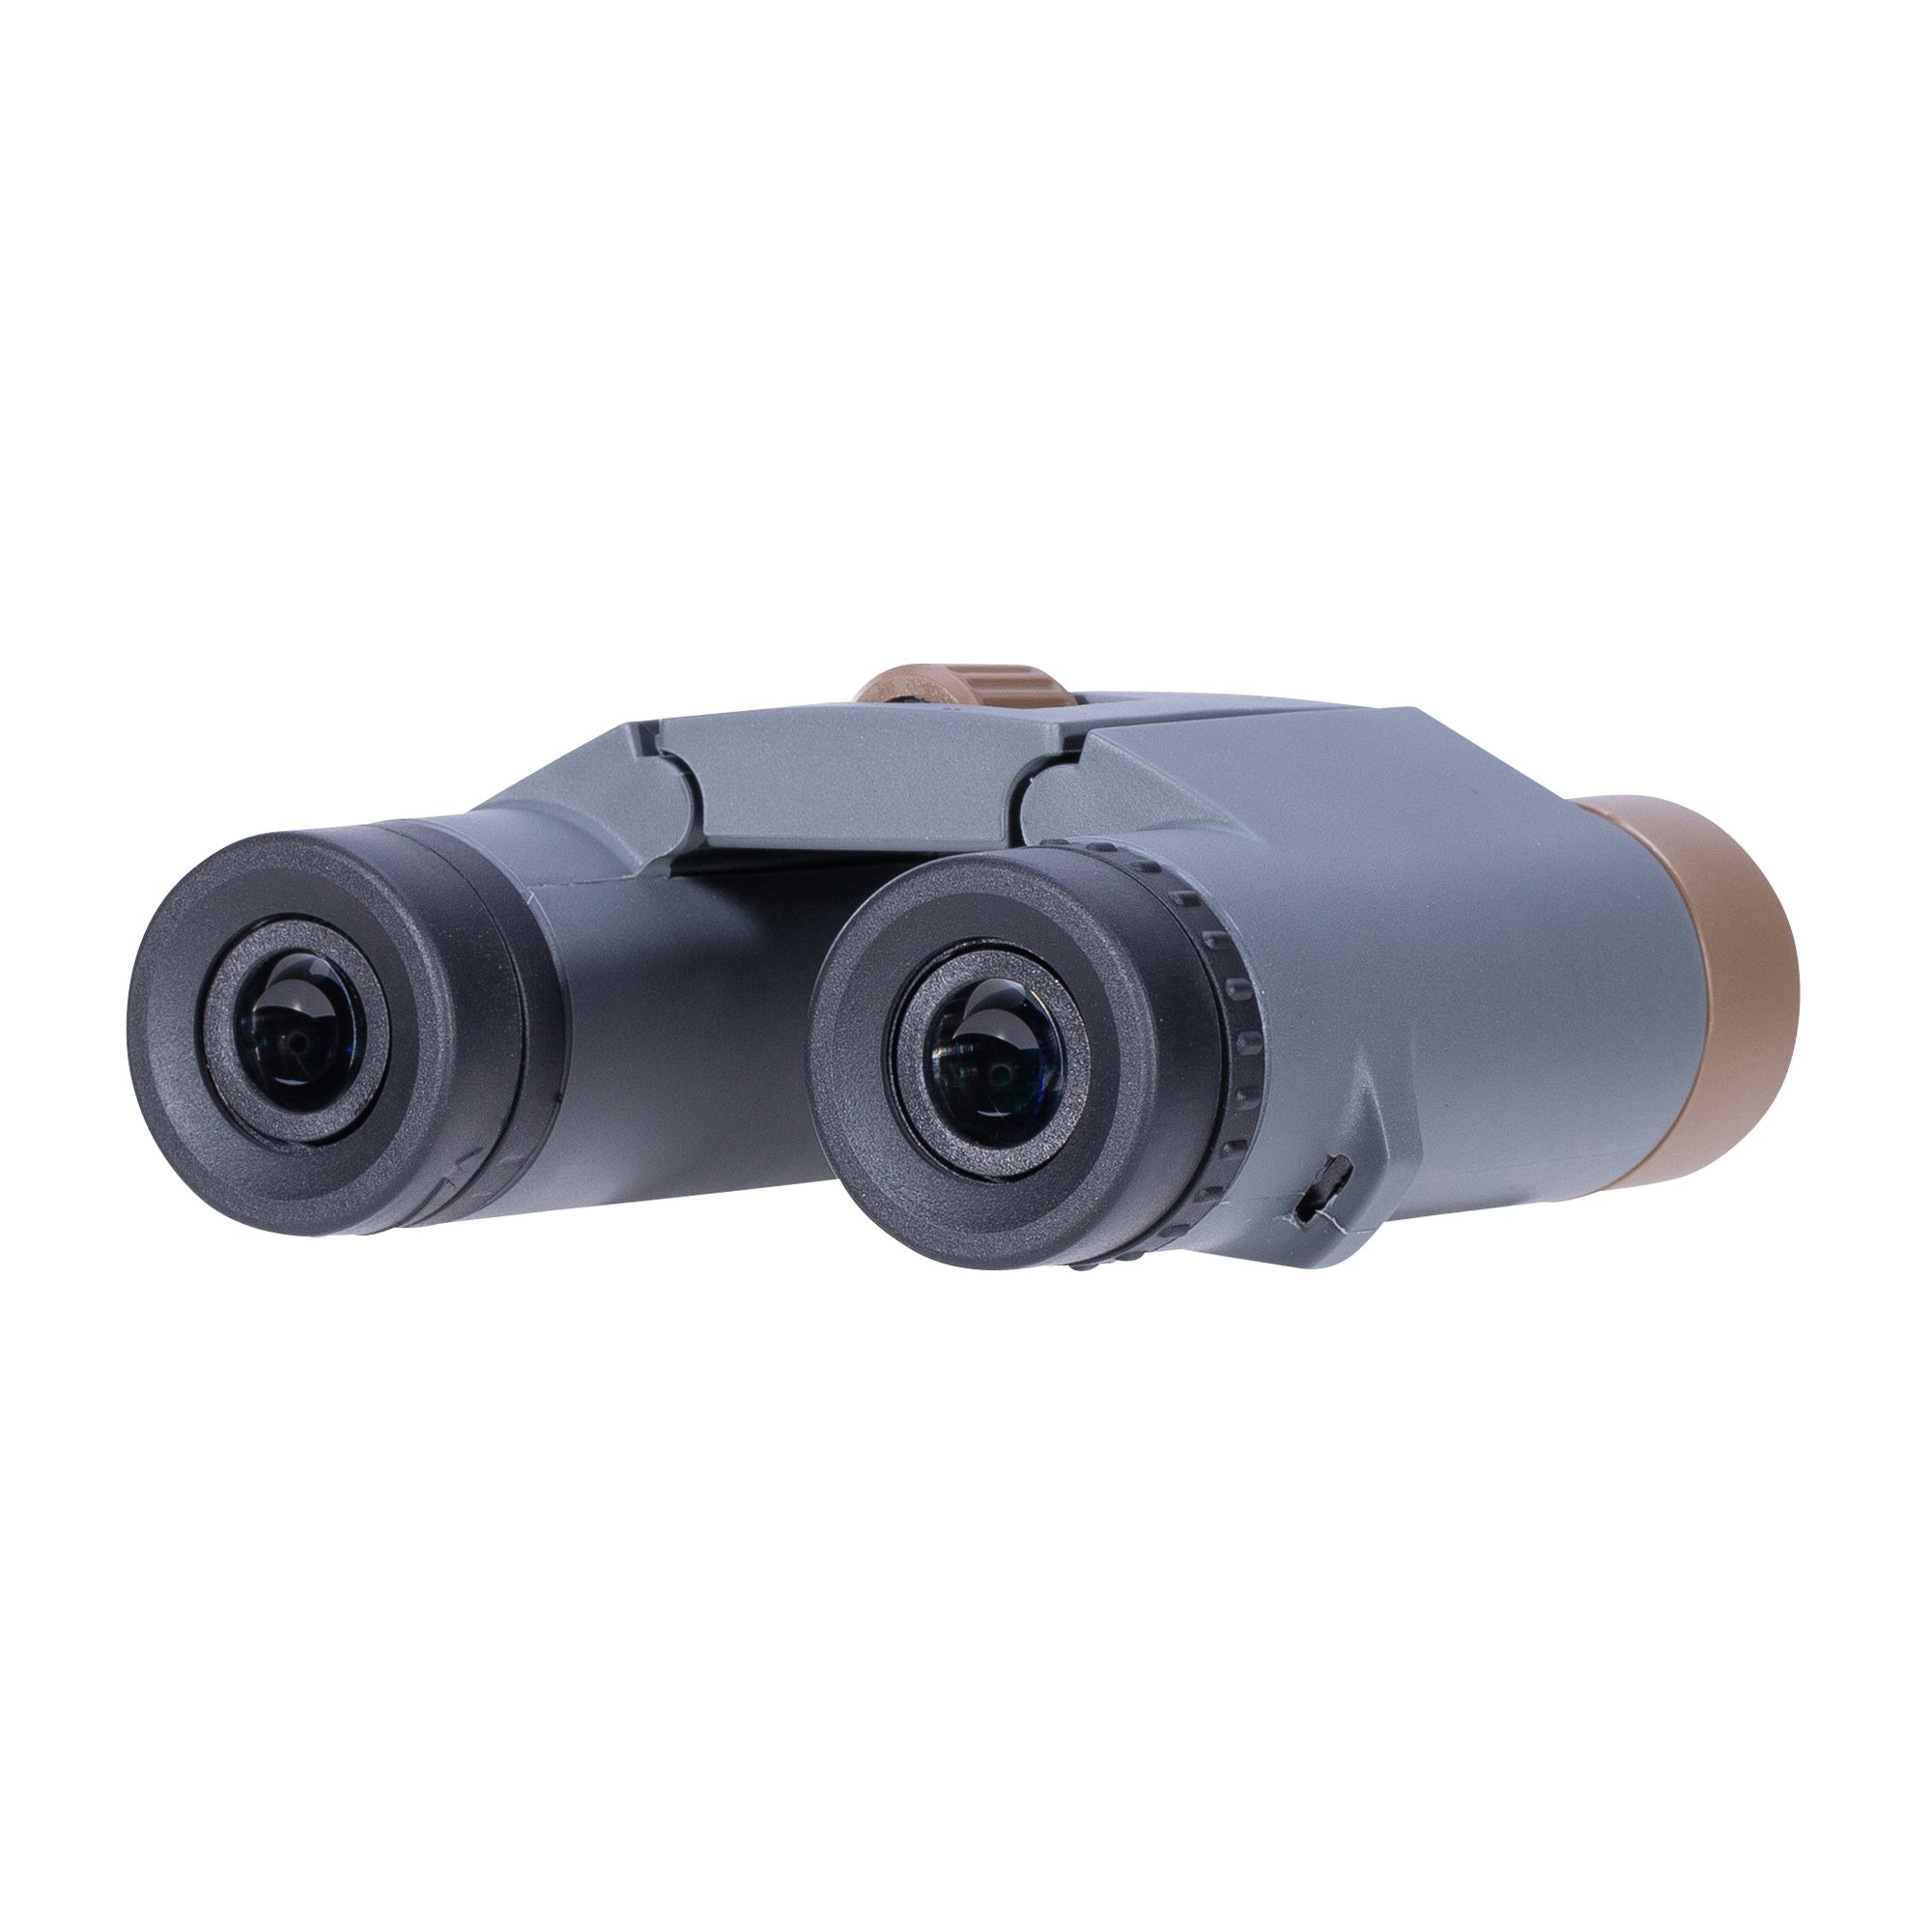 Silva Fernglas Binoculars Scenic 8 schwarz grau braun